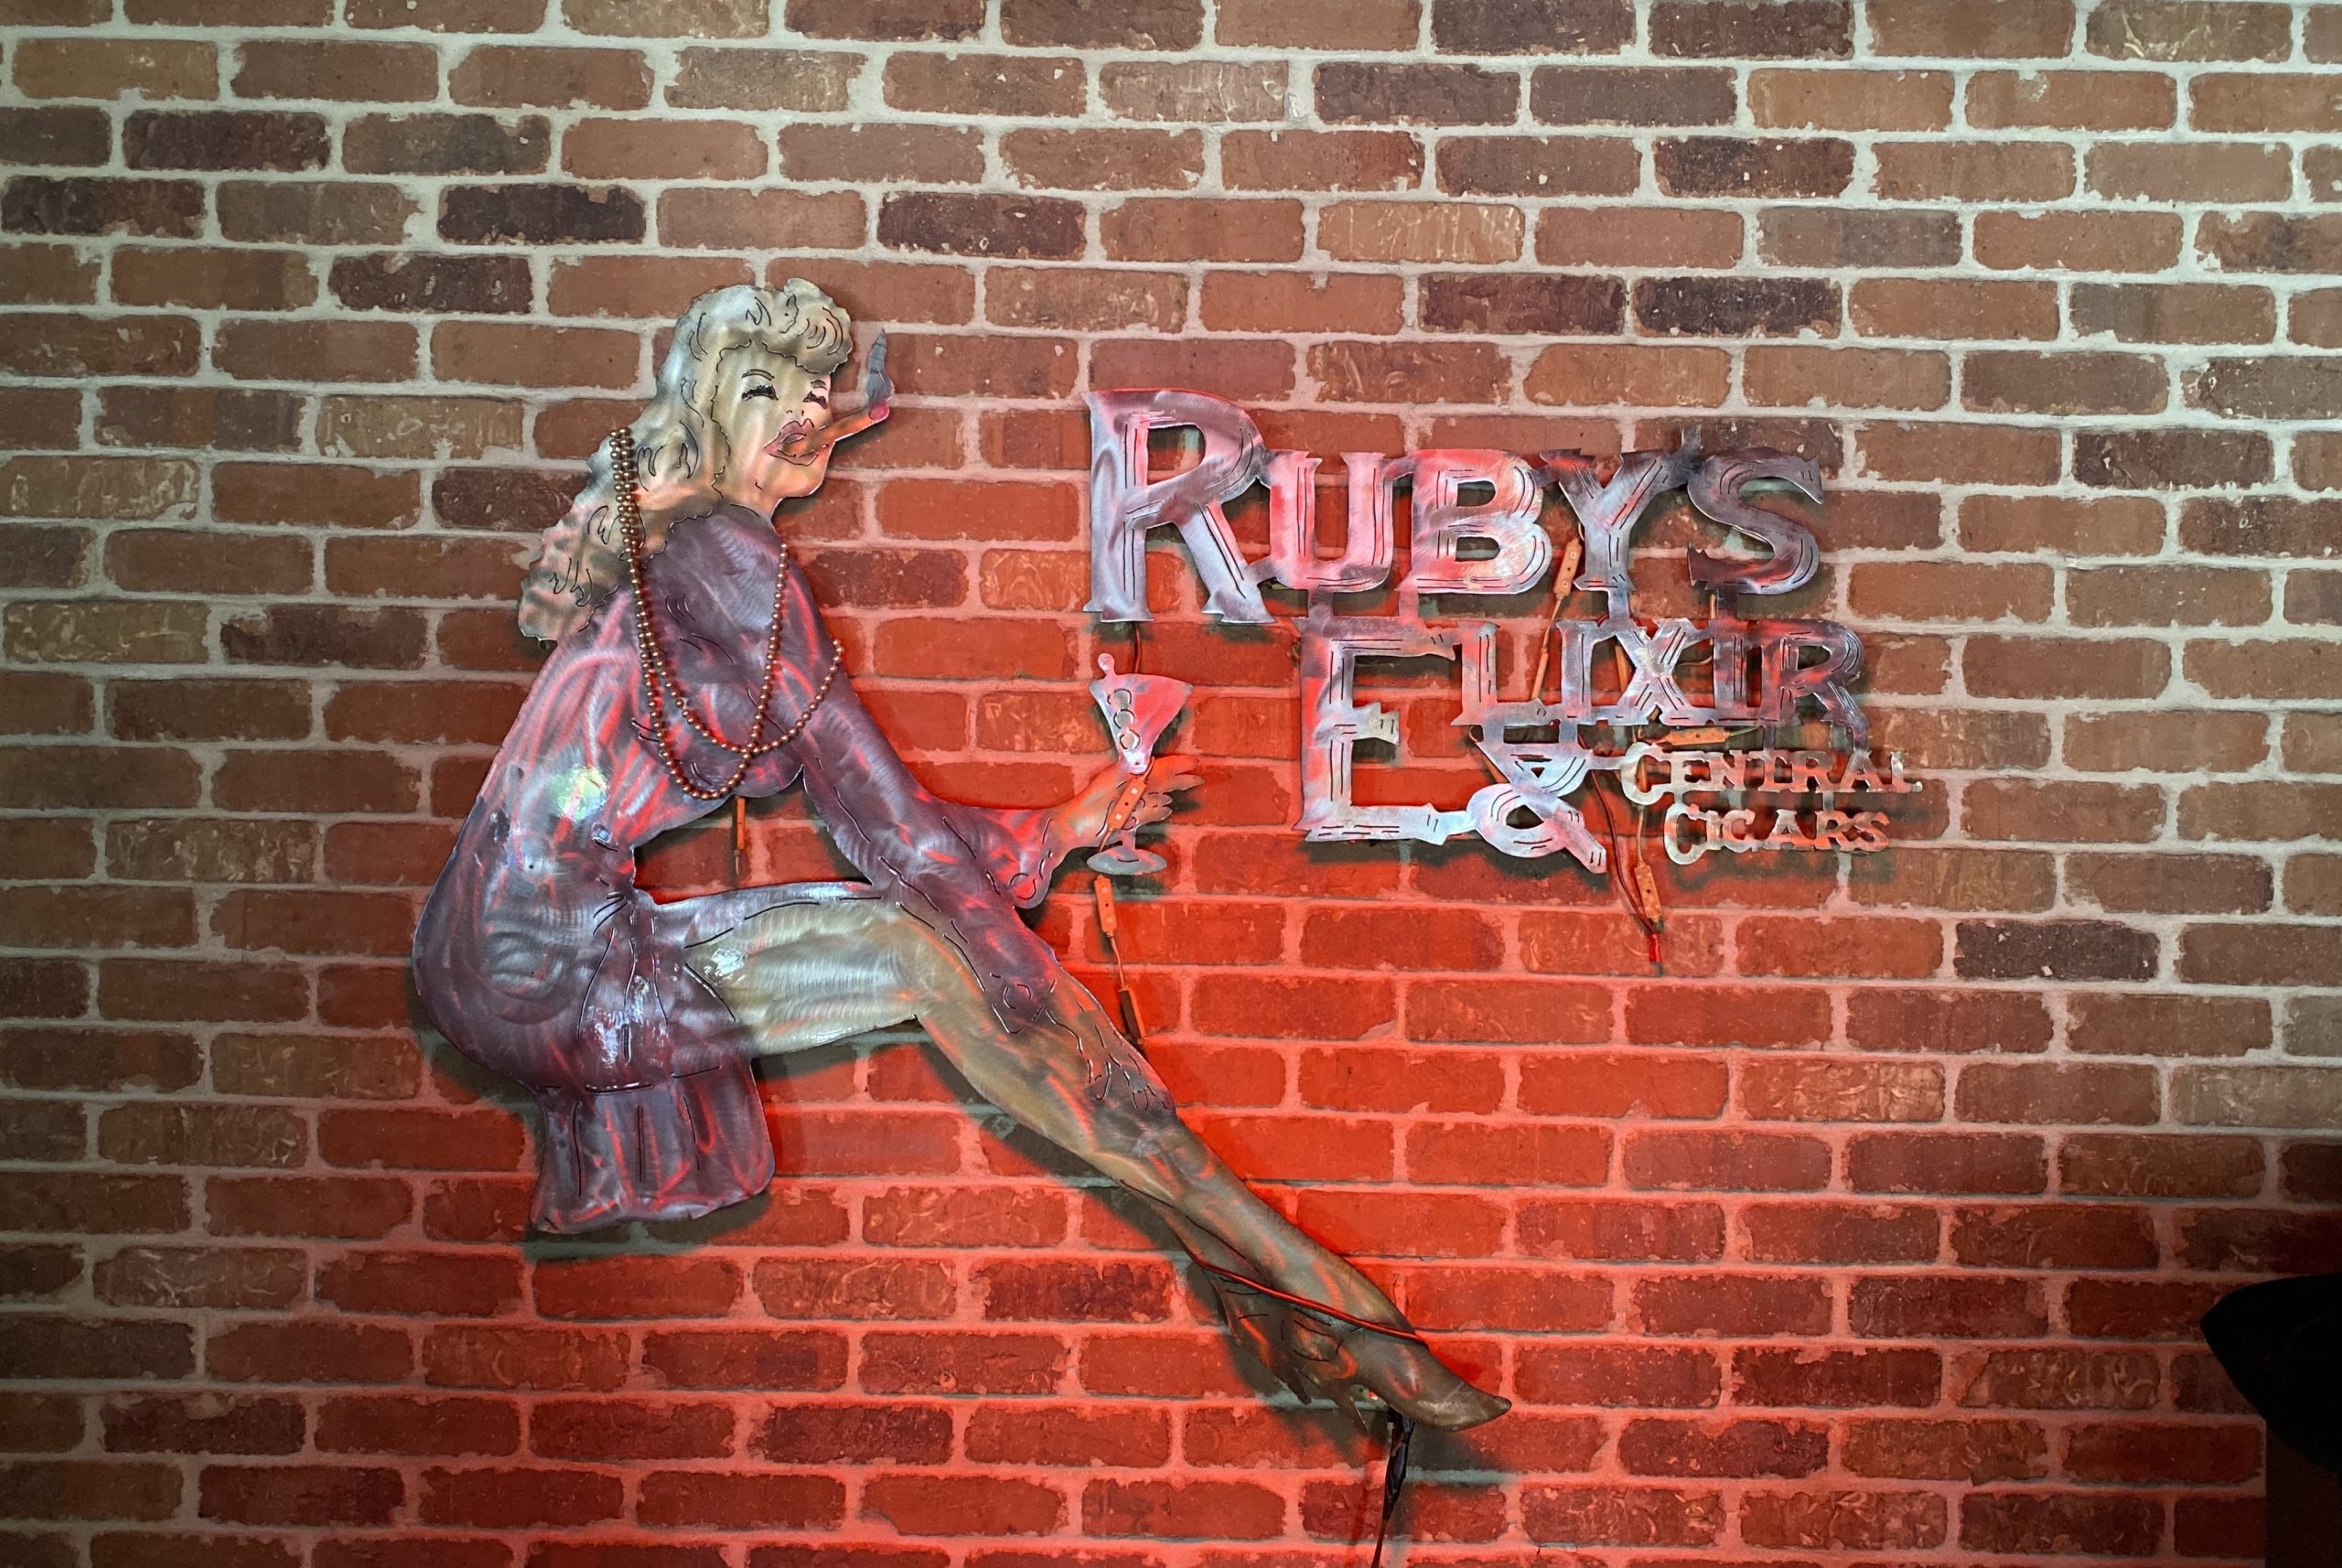 Ruby’s Elixir Announces August Live Music Lineup